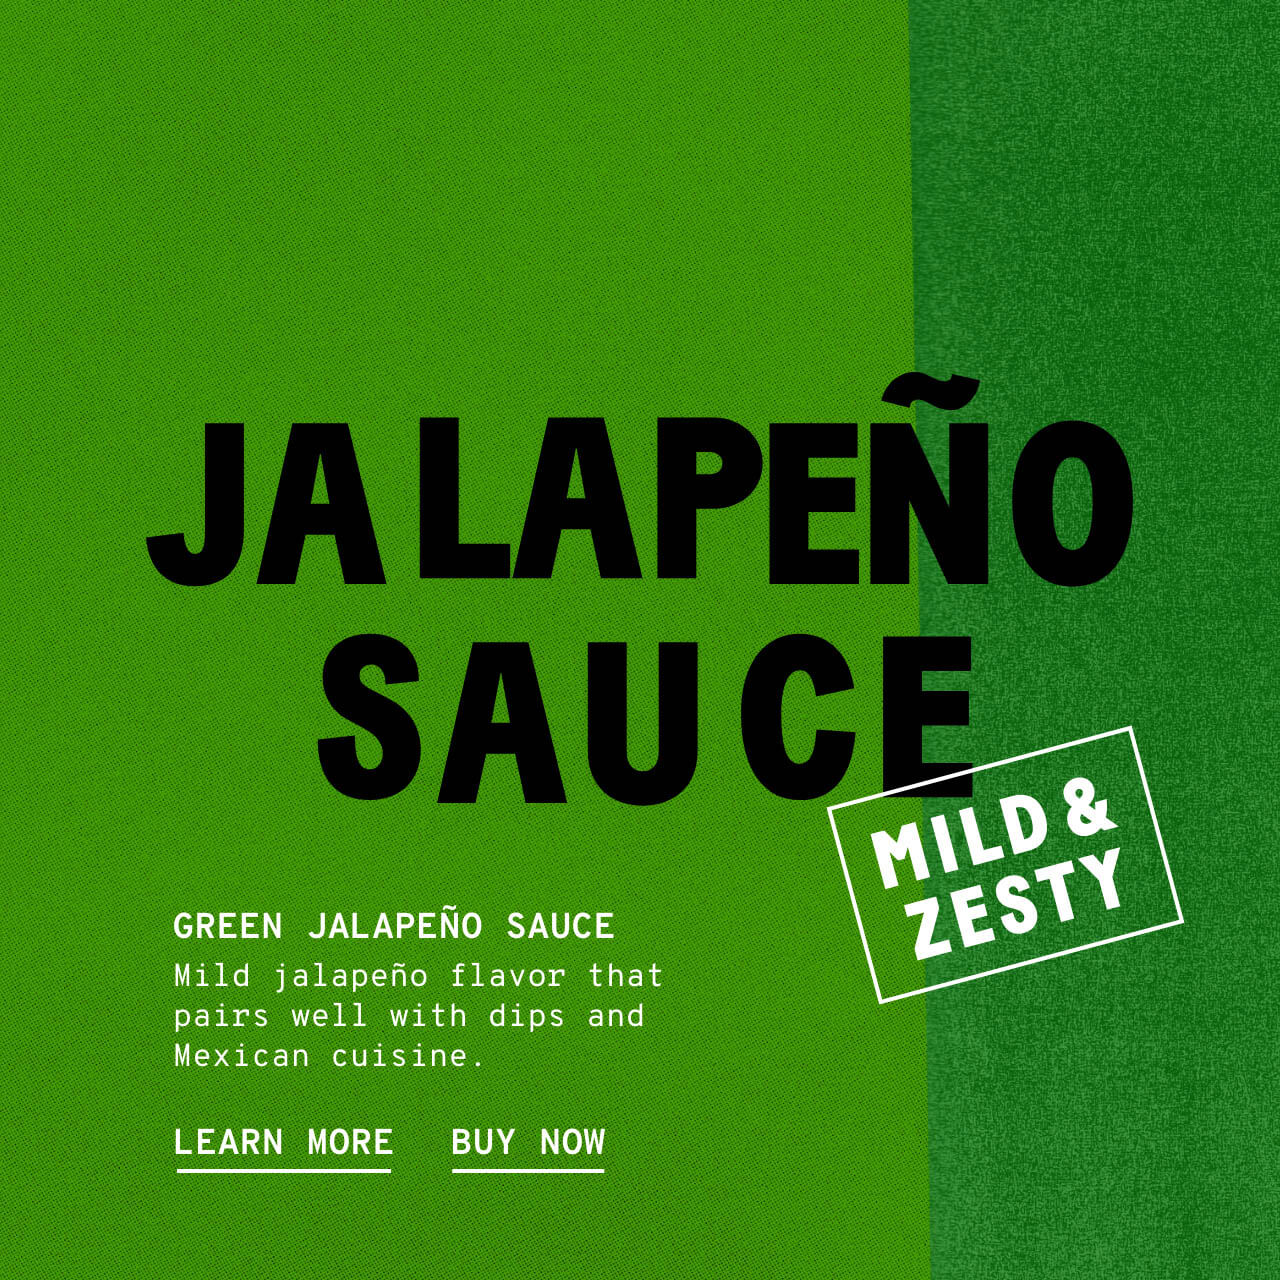 Green Jalapeno Sauce - Description